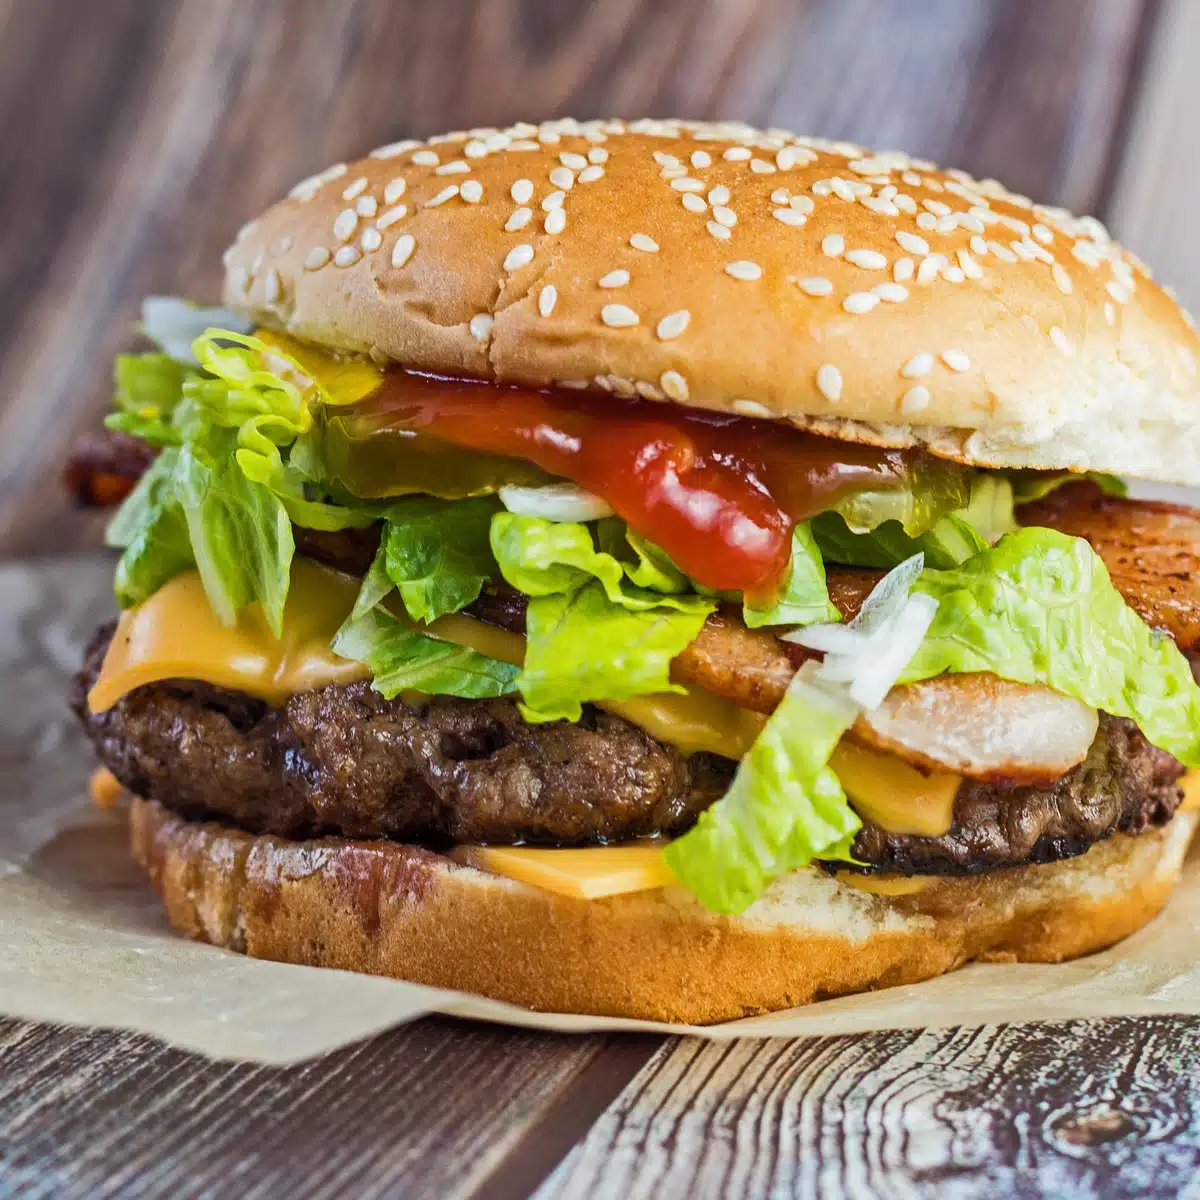 Kvadratna slika cheeseburgera sa zelenom salatom.